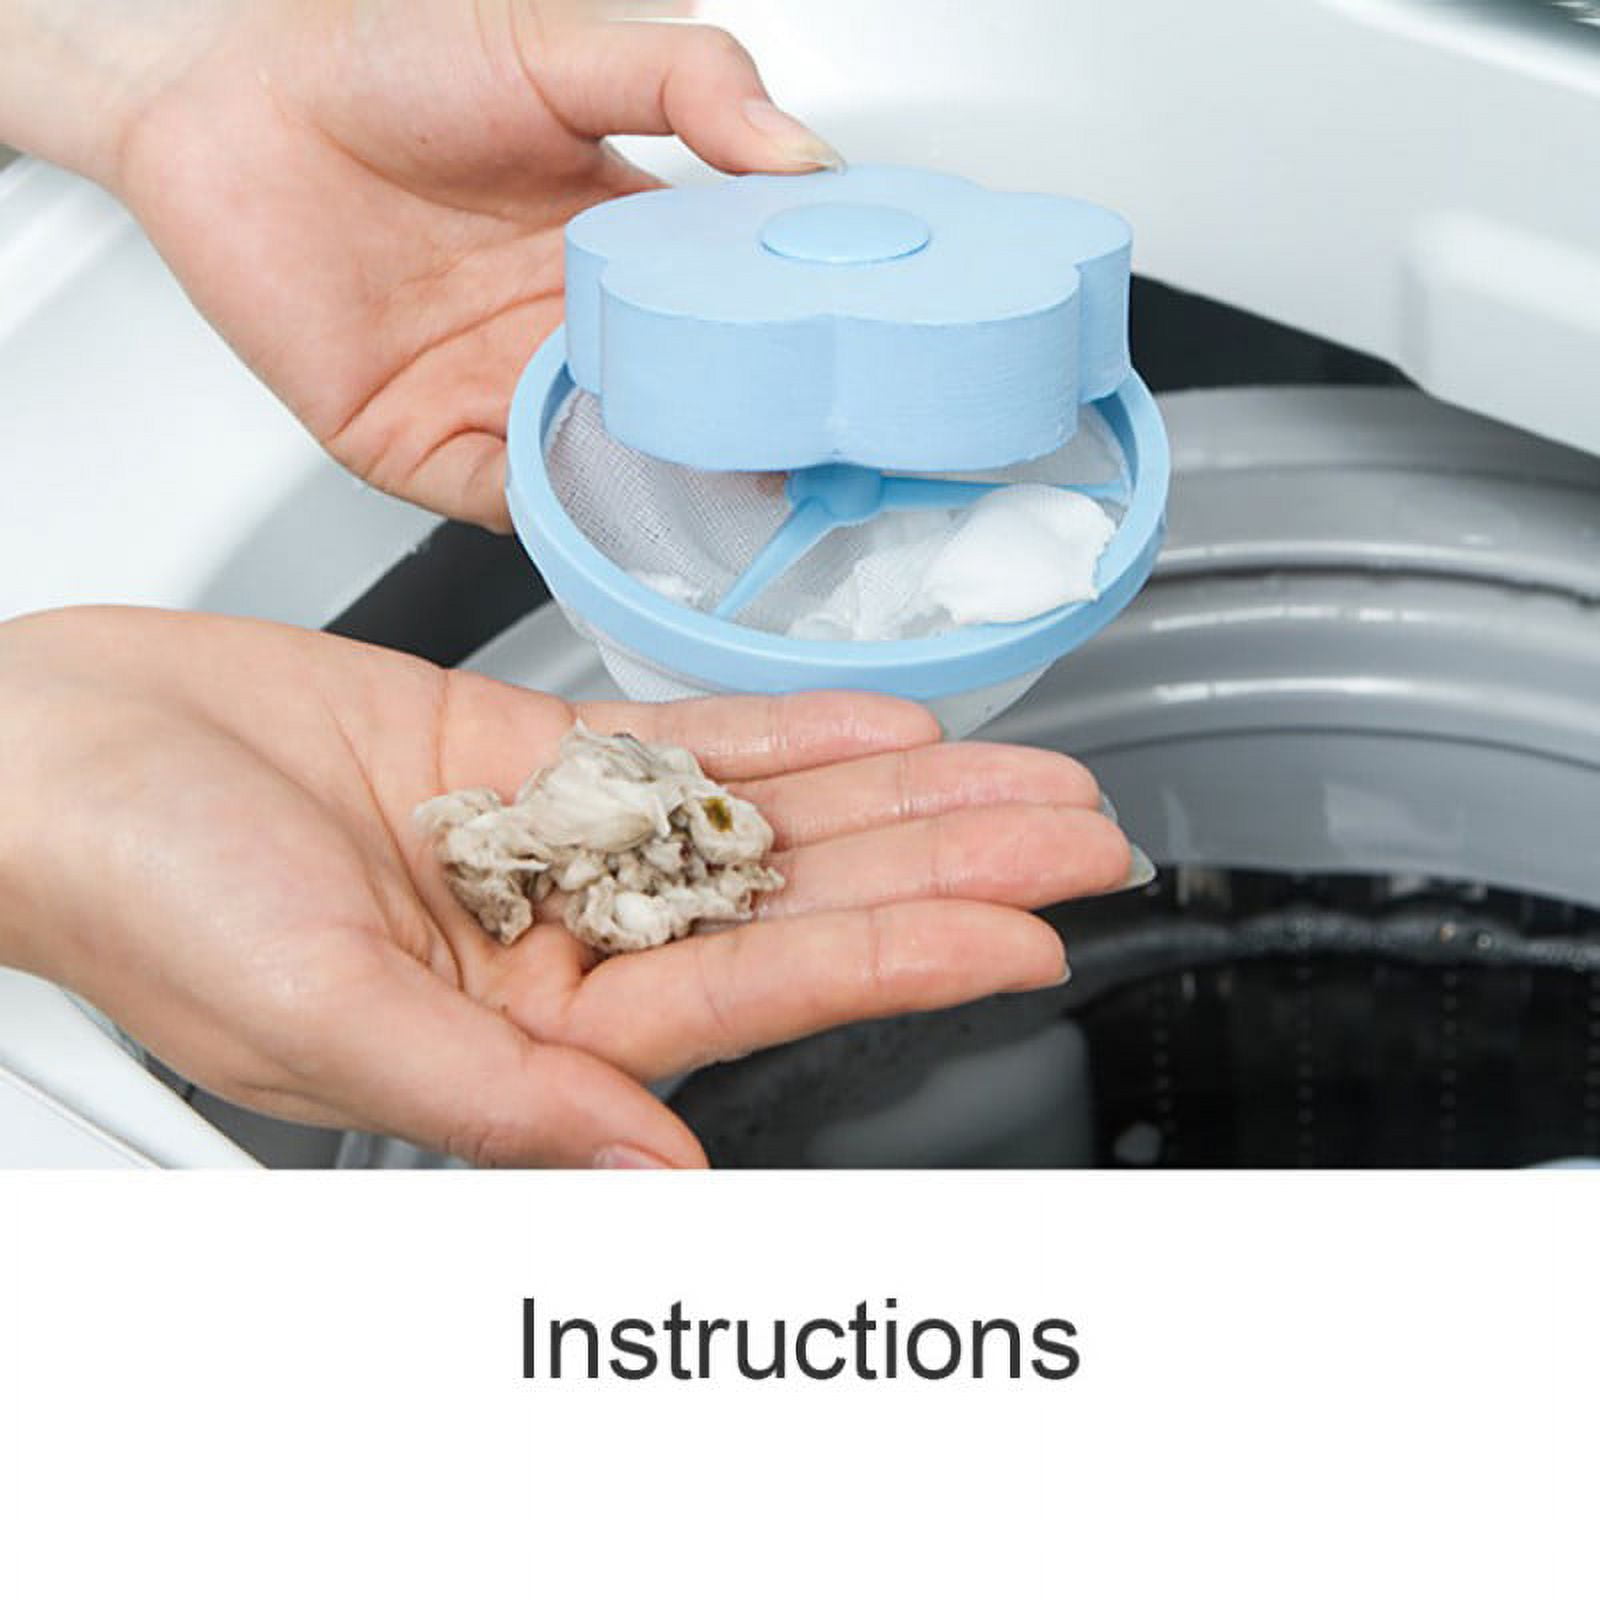 Dropship Laundry Hair Remover Pet Lint Washing Machine Catcher